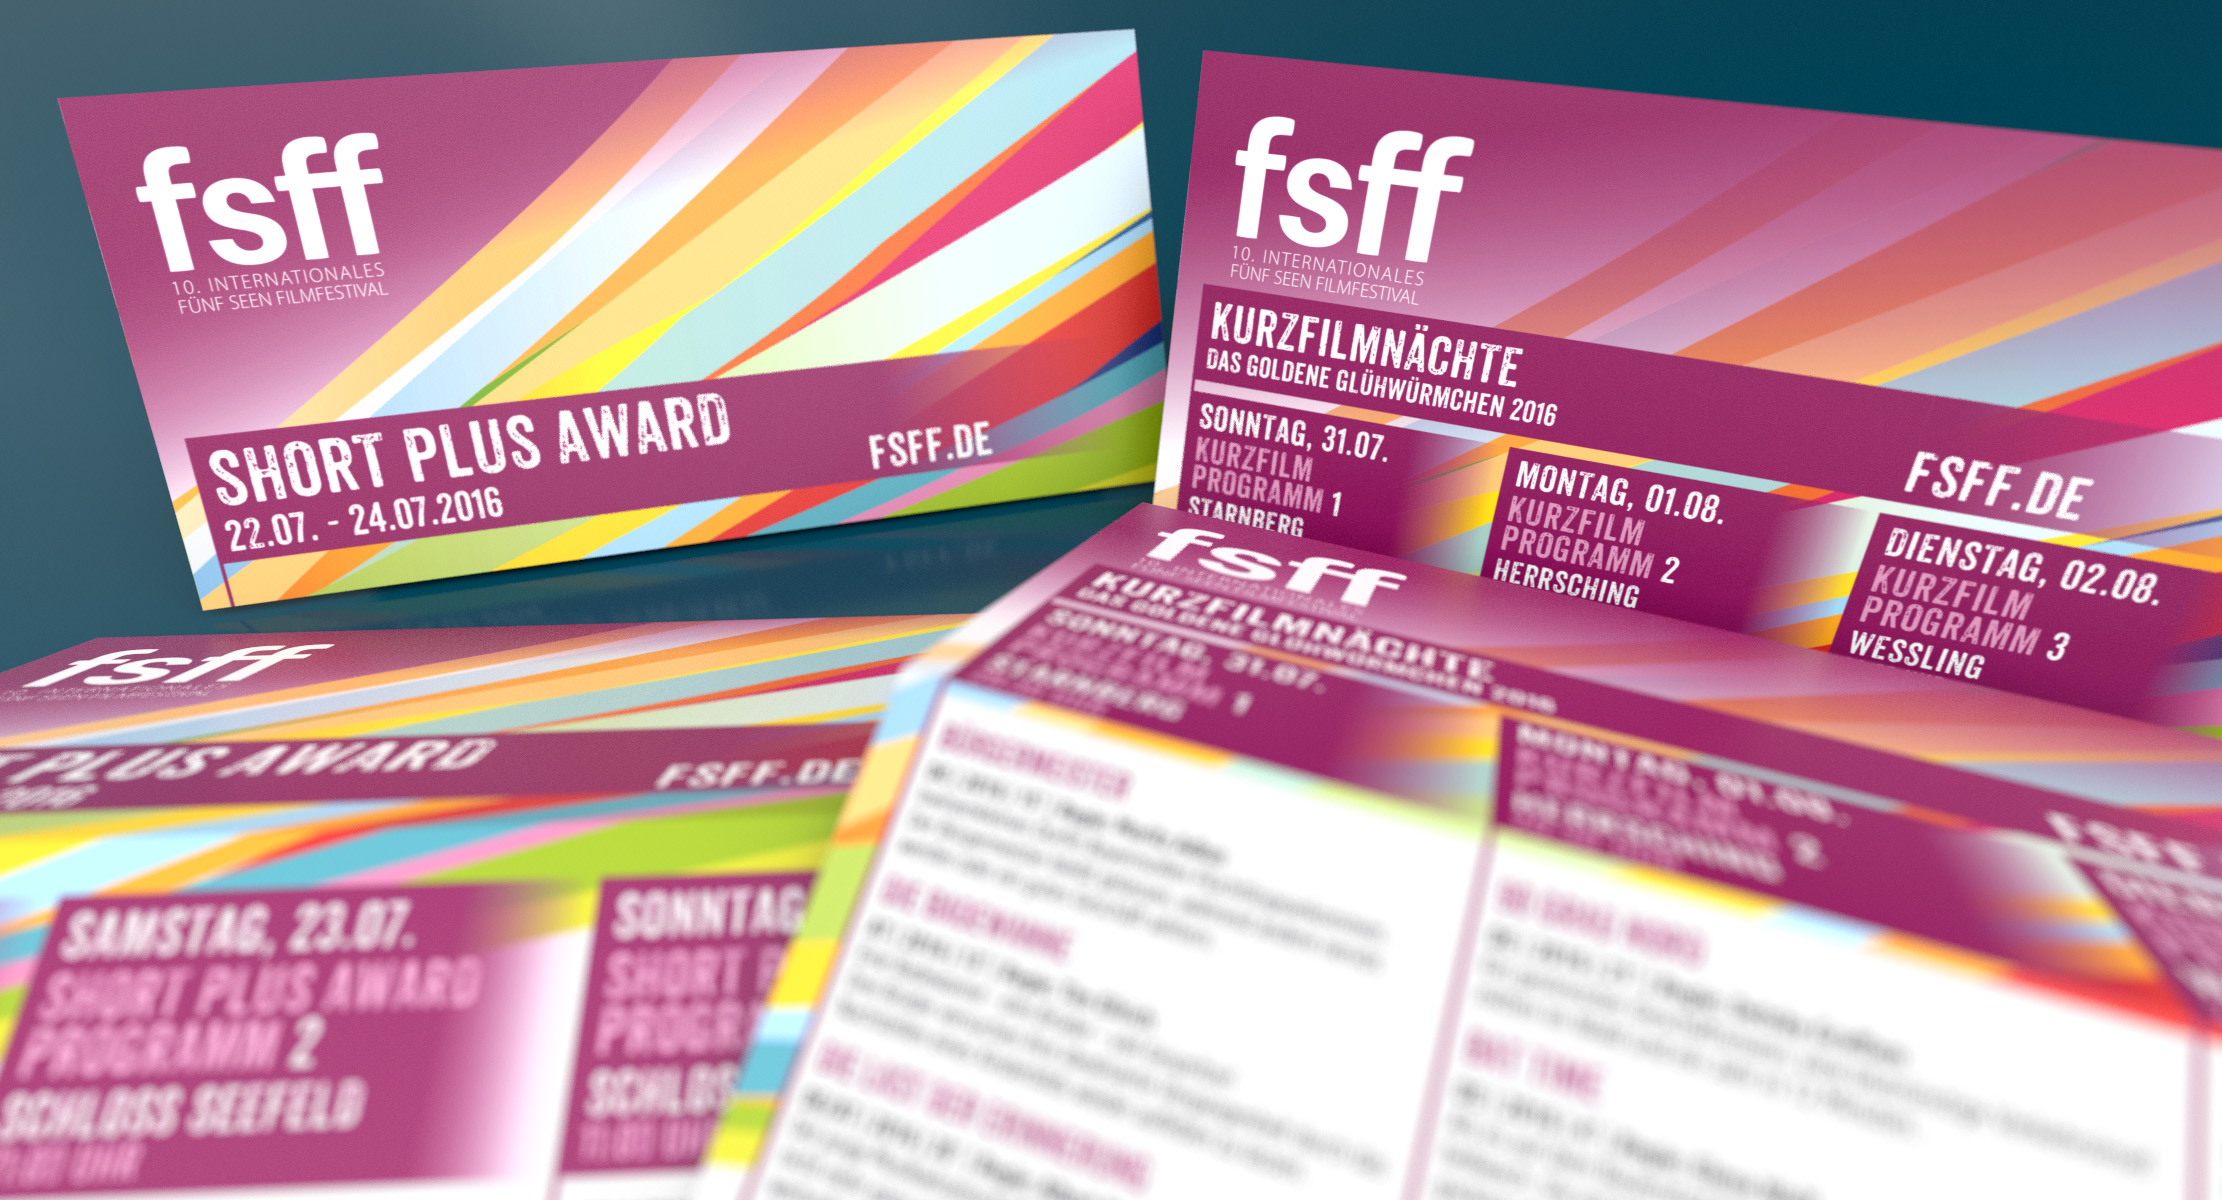 FSFF 2016 – Short Plus & Kurzfilmnächte – Das Programm ist fertig